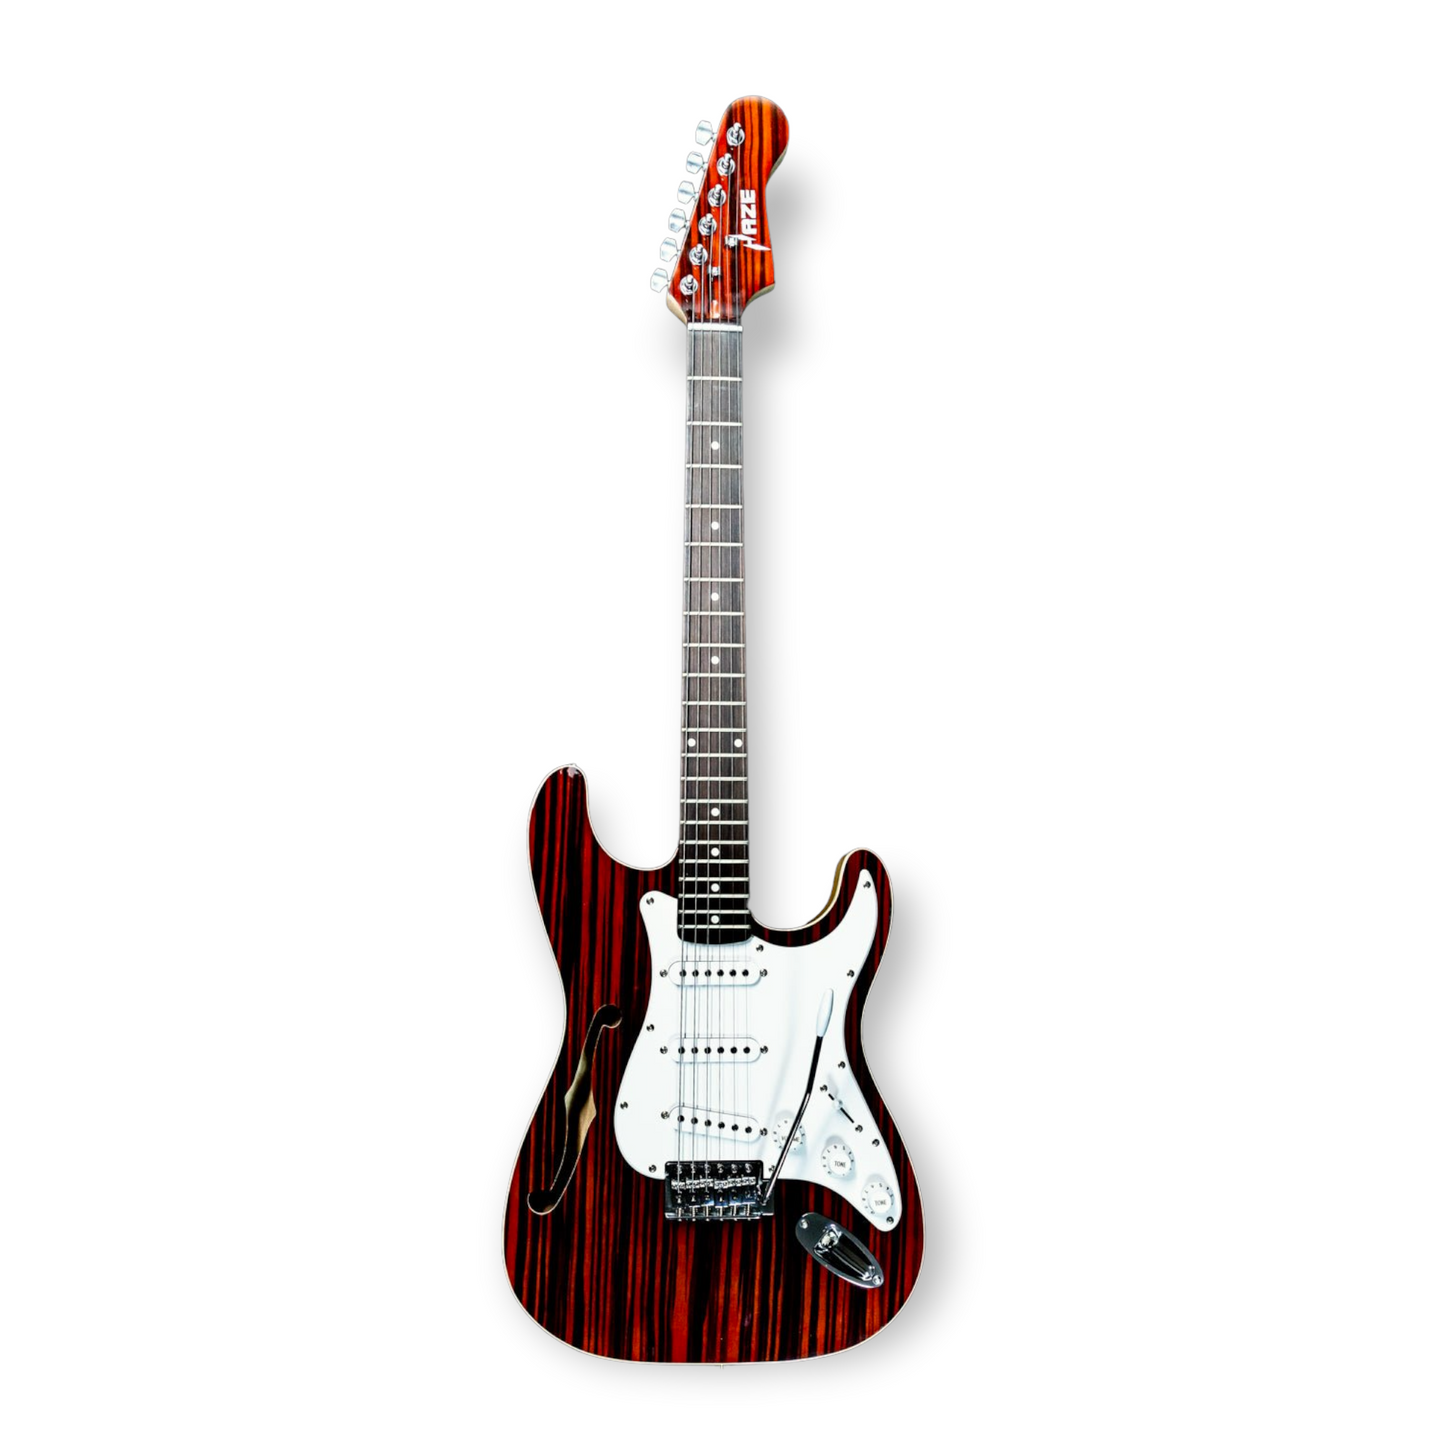 Haze Semi-Hollow Paulownia Zebrawood Veneer Electric Guitar - Red